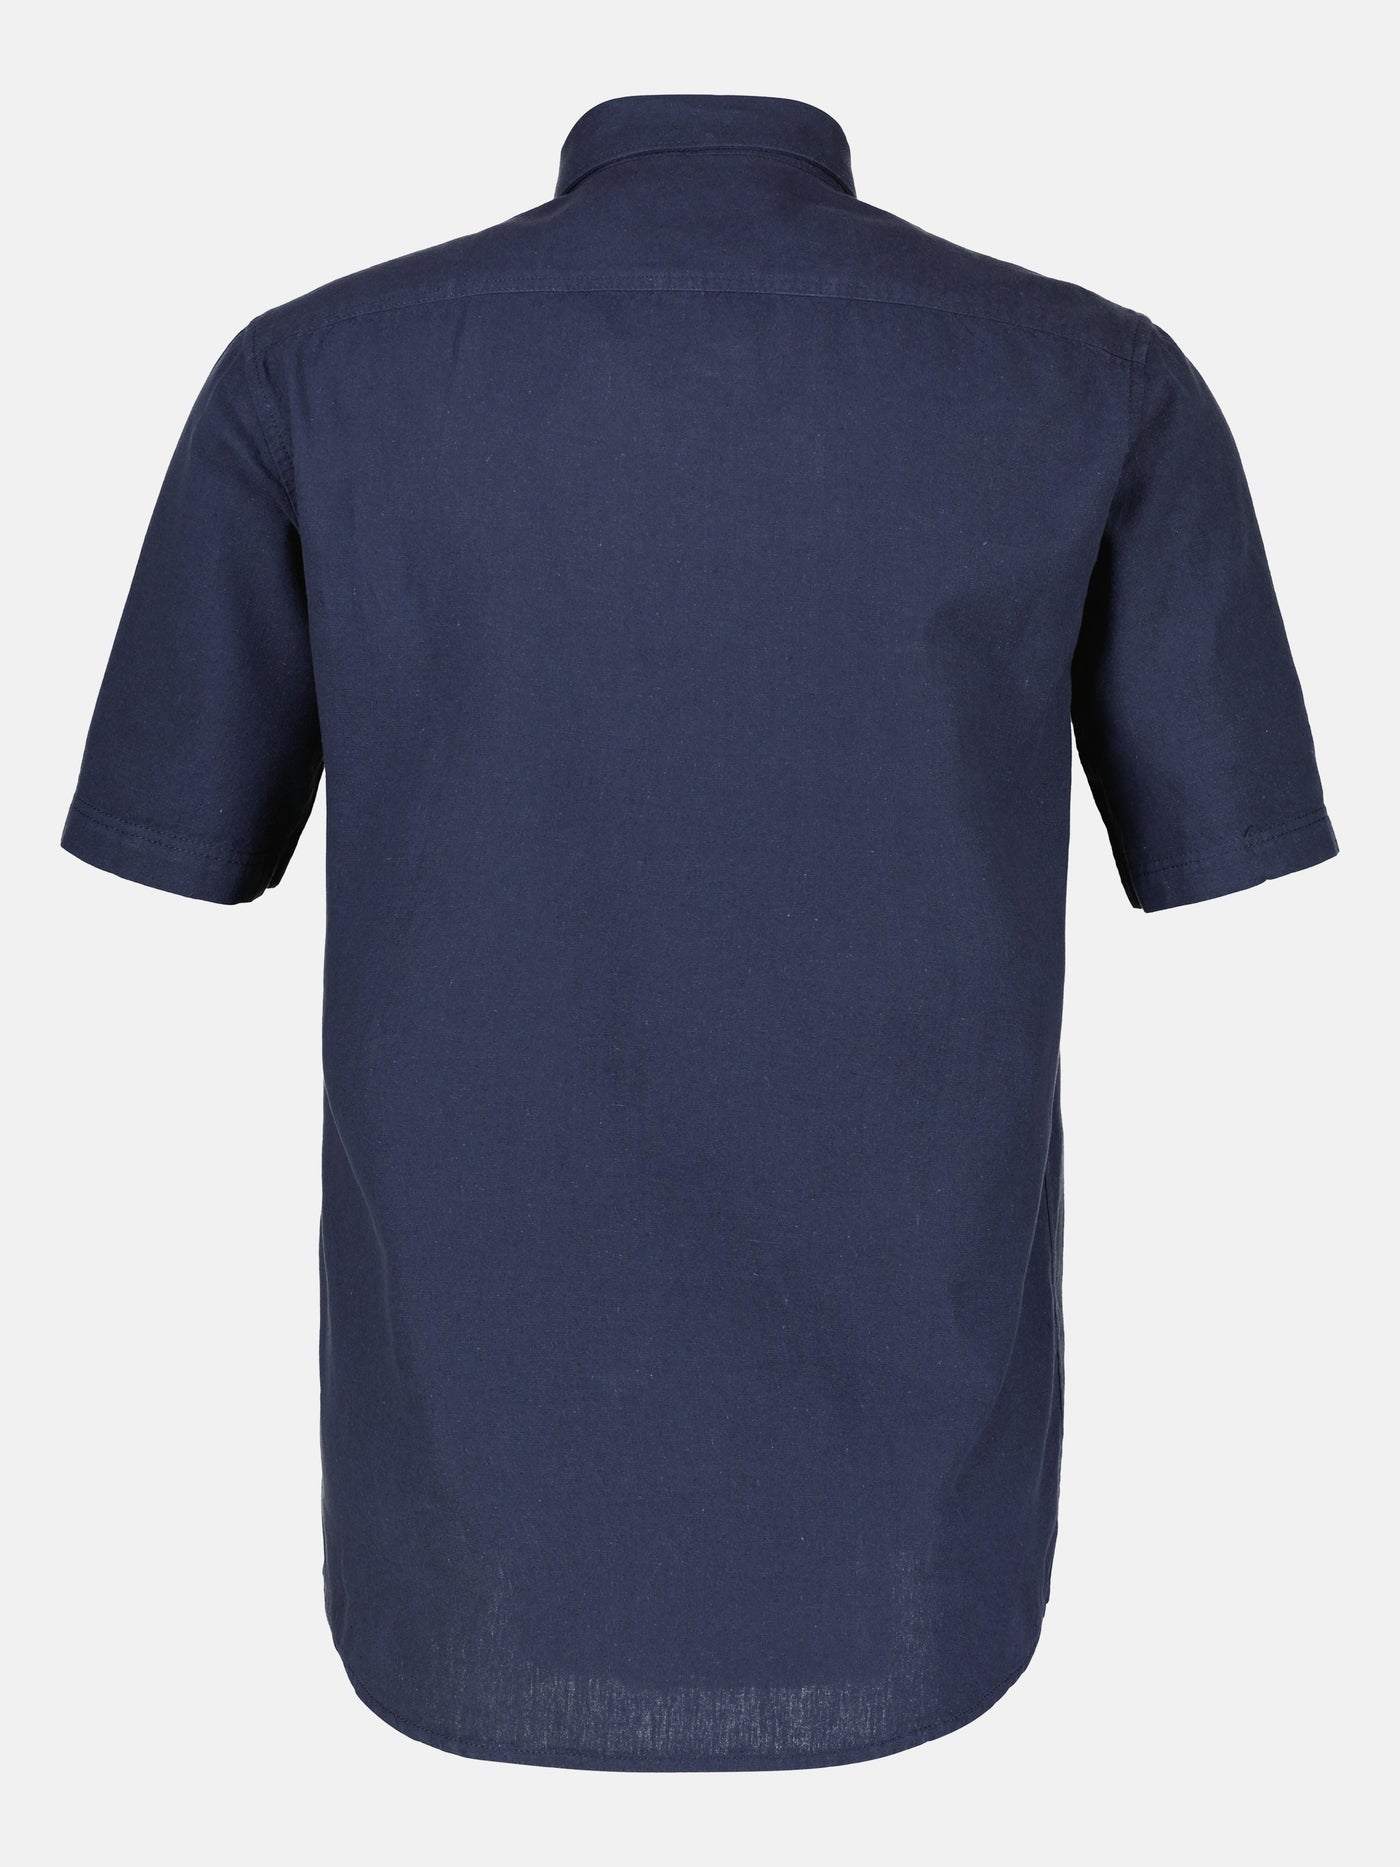 Short-sleeved shirt, cotton-linen mix – LERROS SHOP